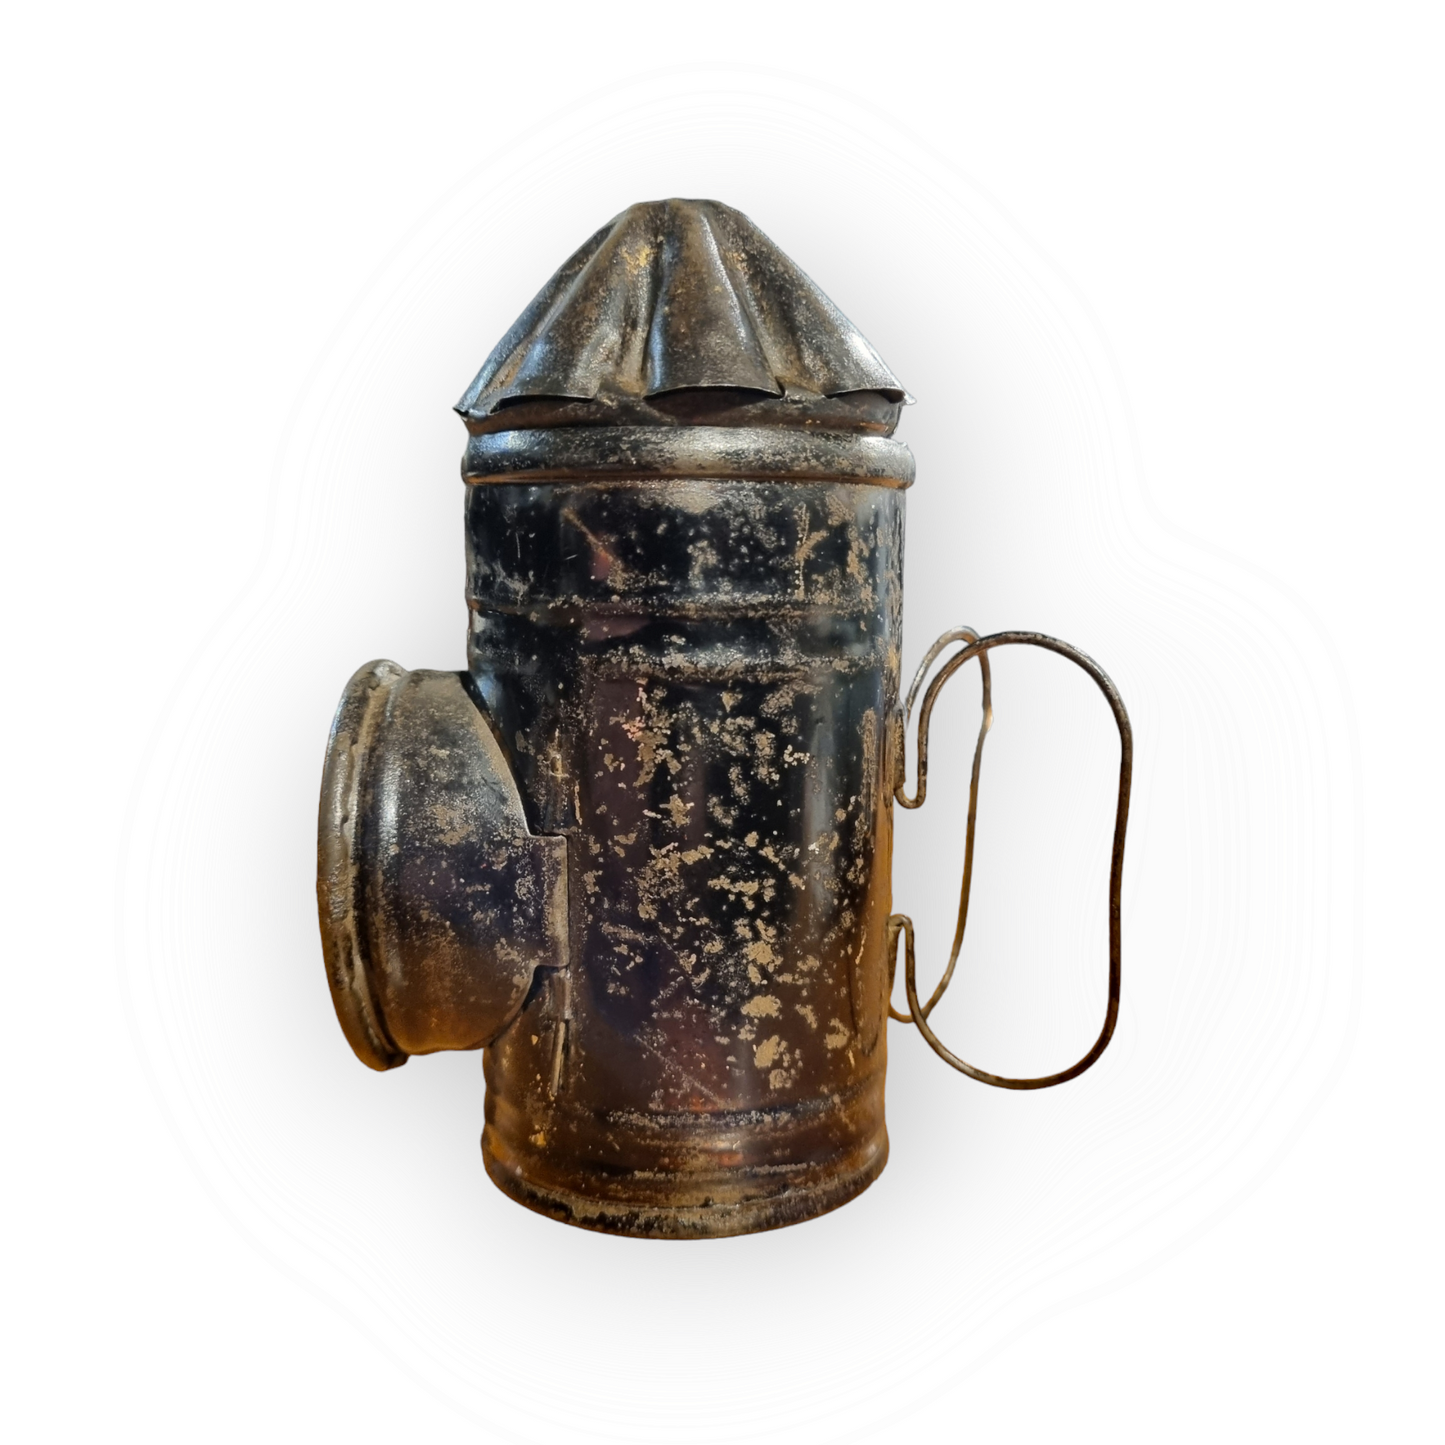 A Diminutive 19thC English Antique Toleware Child's Candle Lantern